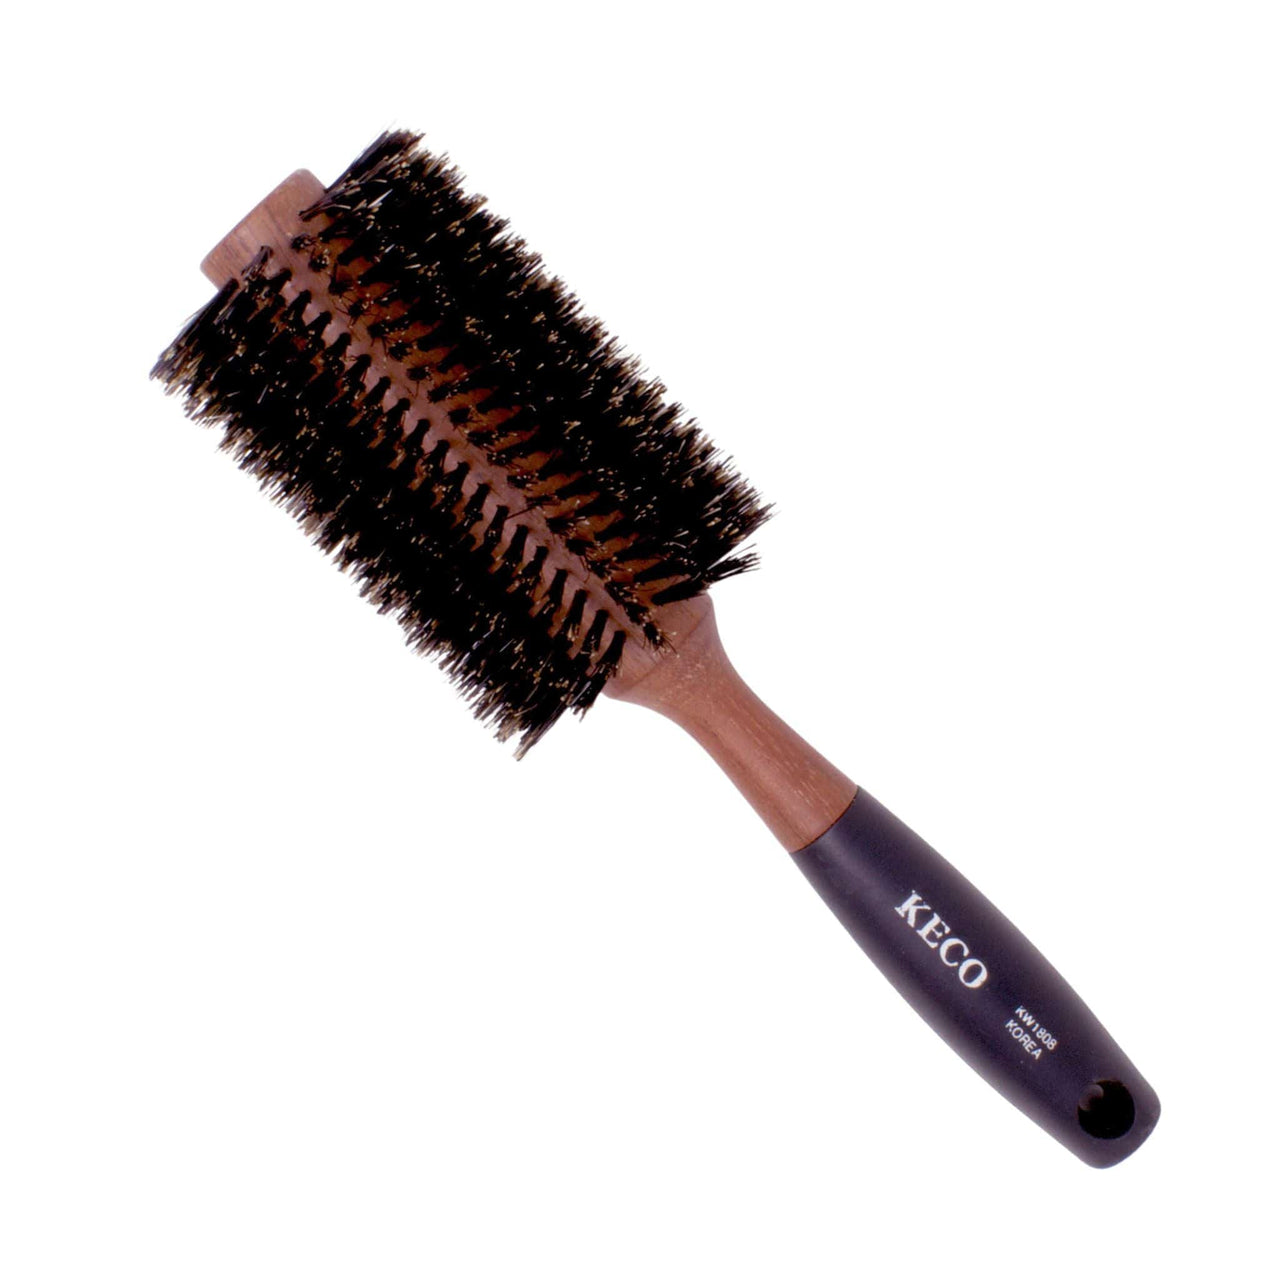 KECO_Round brush 6.5 cm / 2.5" wide_Cosmetic World